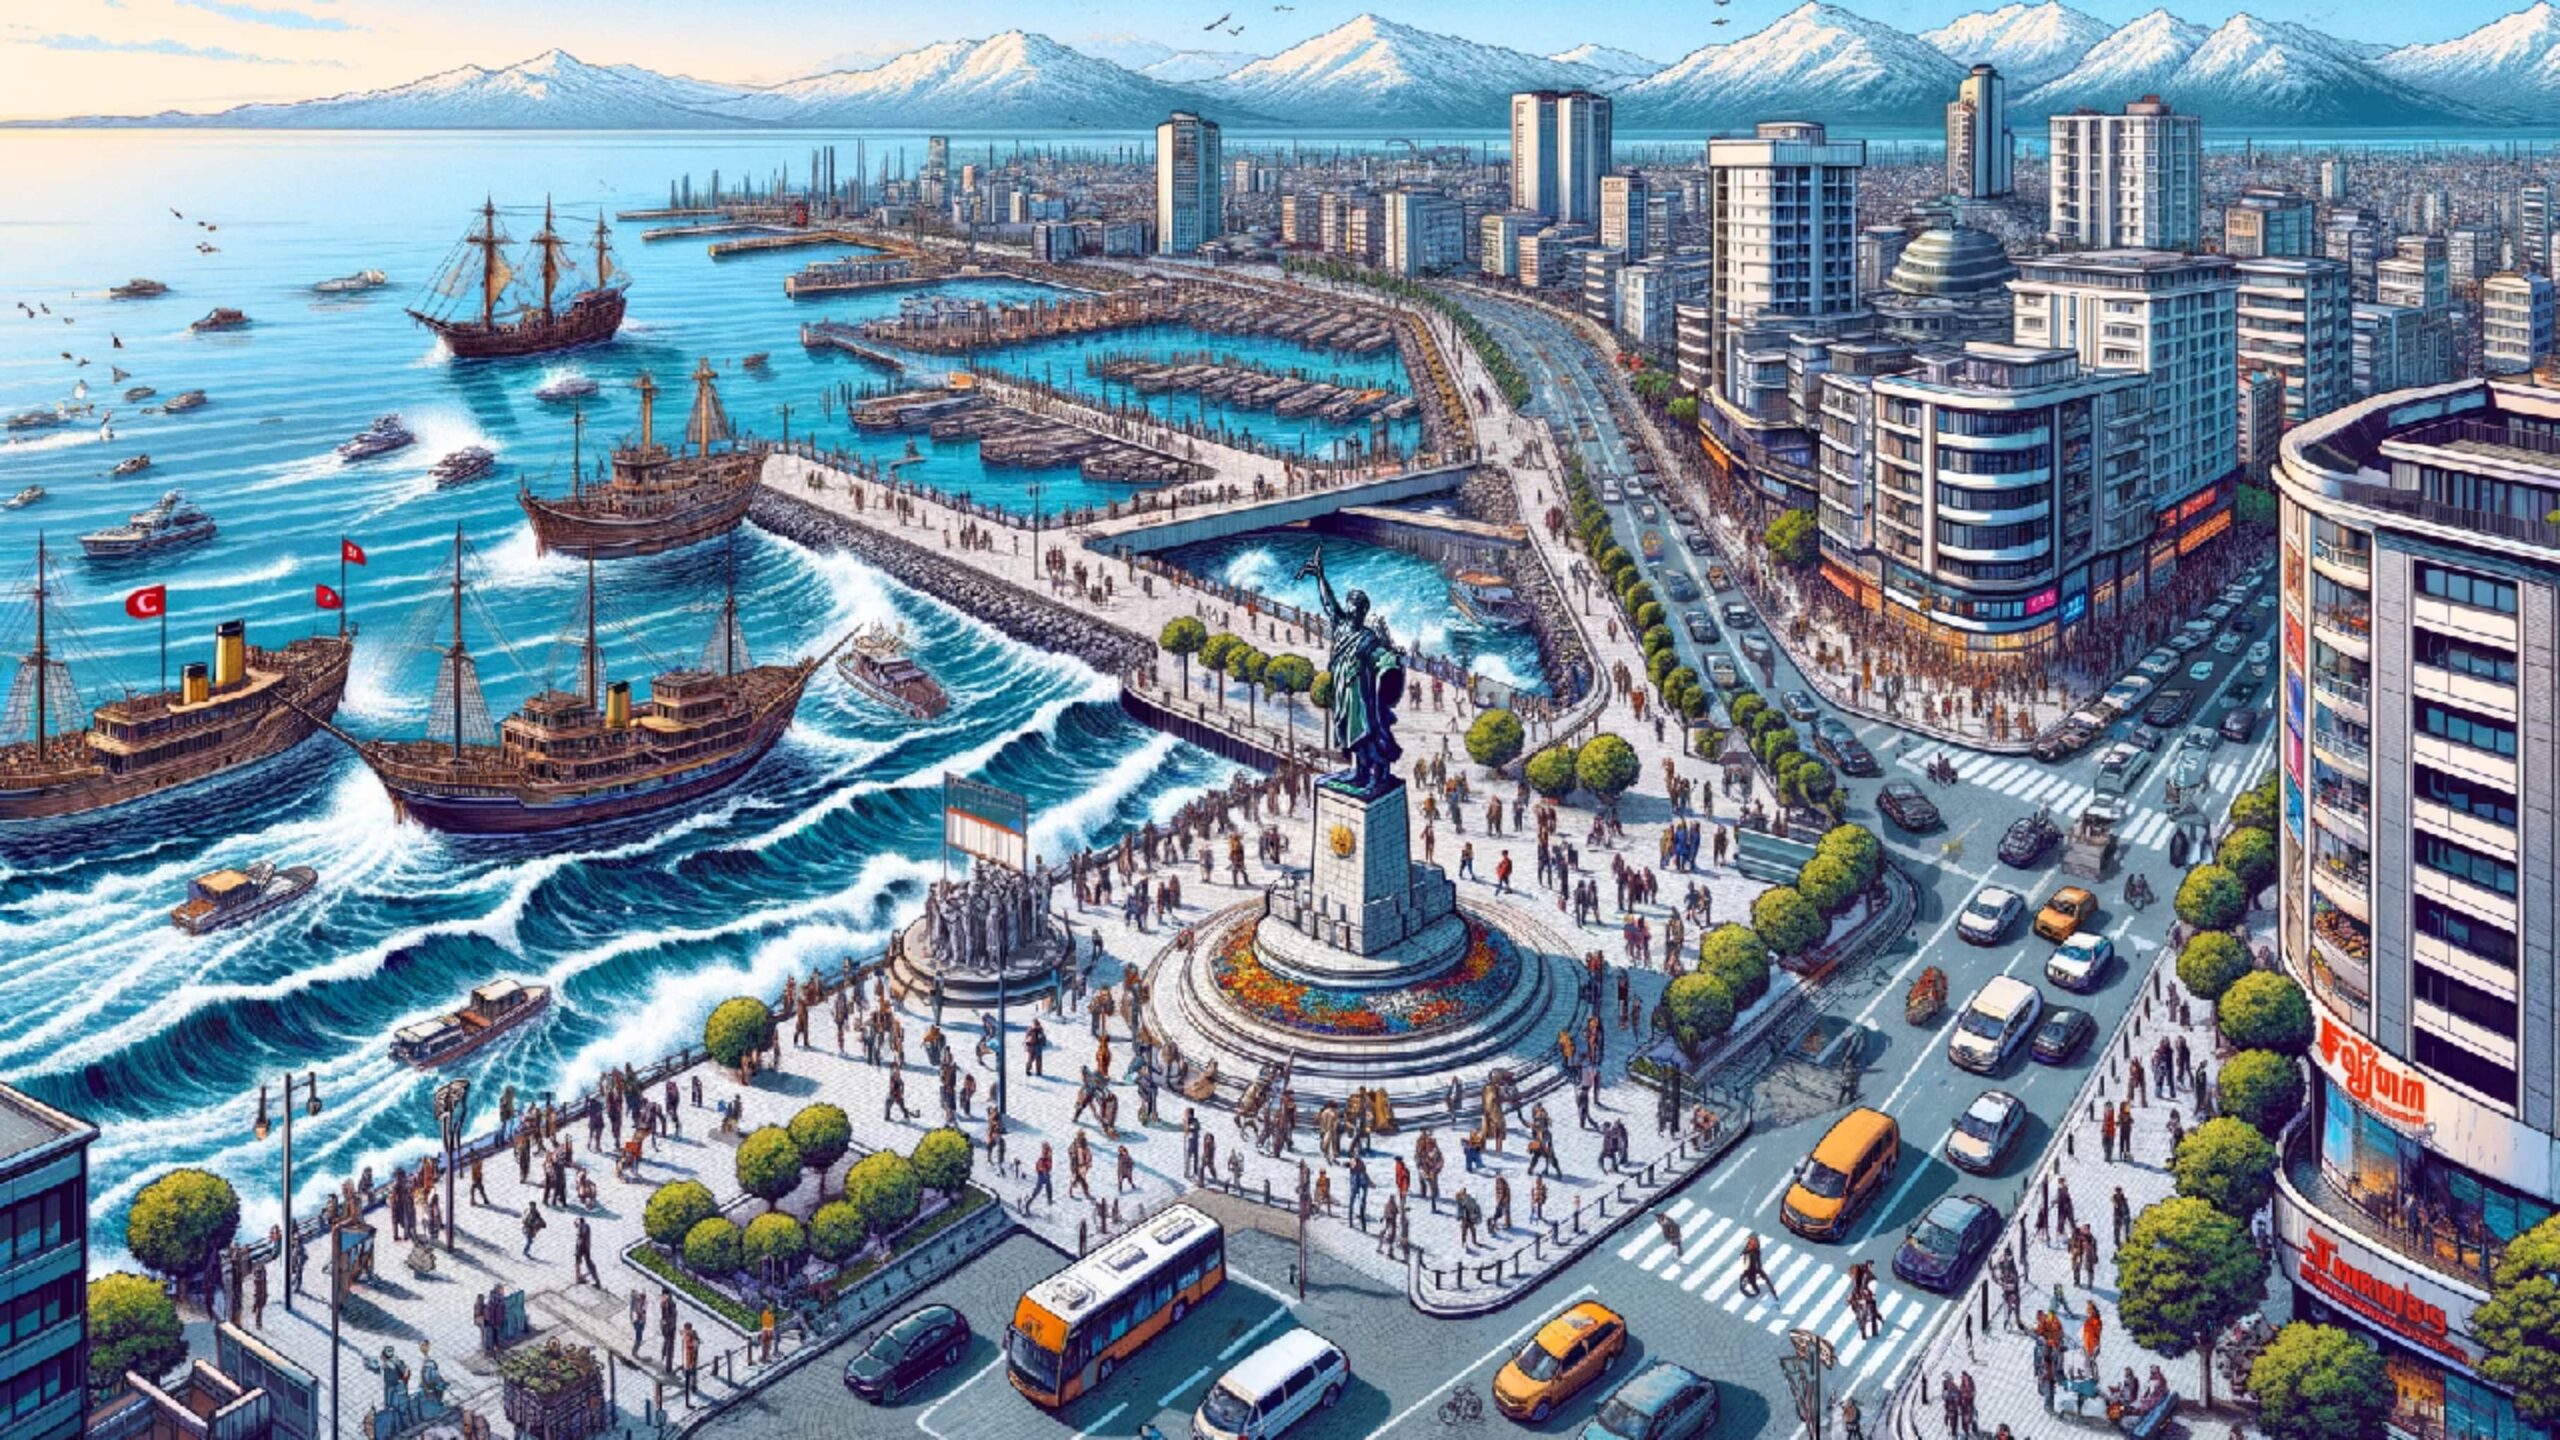 How did artificial intelligence draw Türkiye's cities?